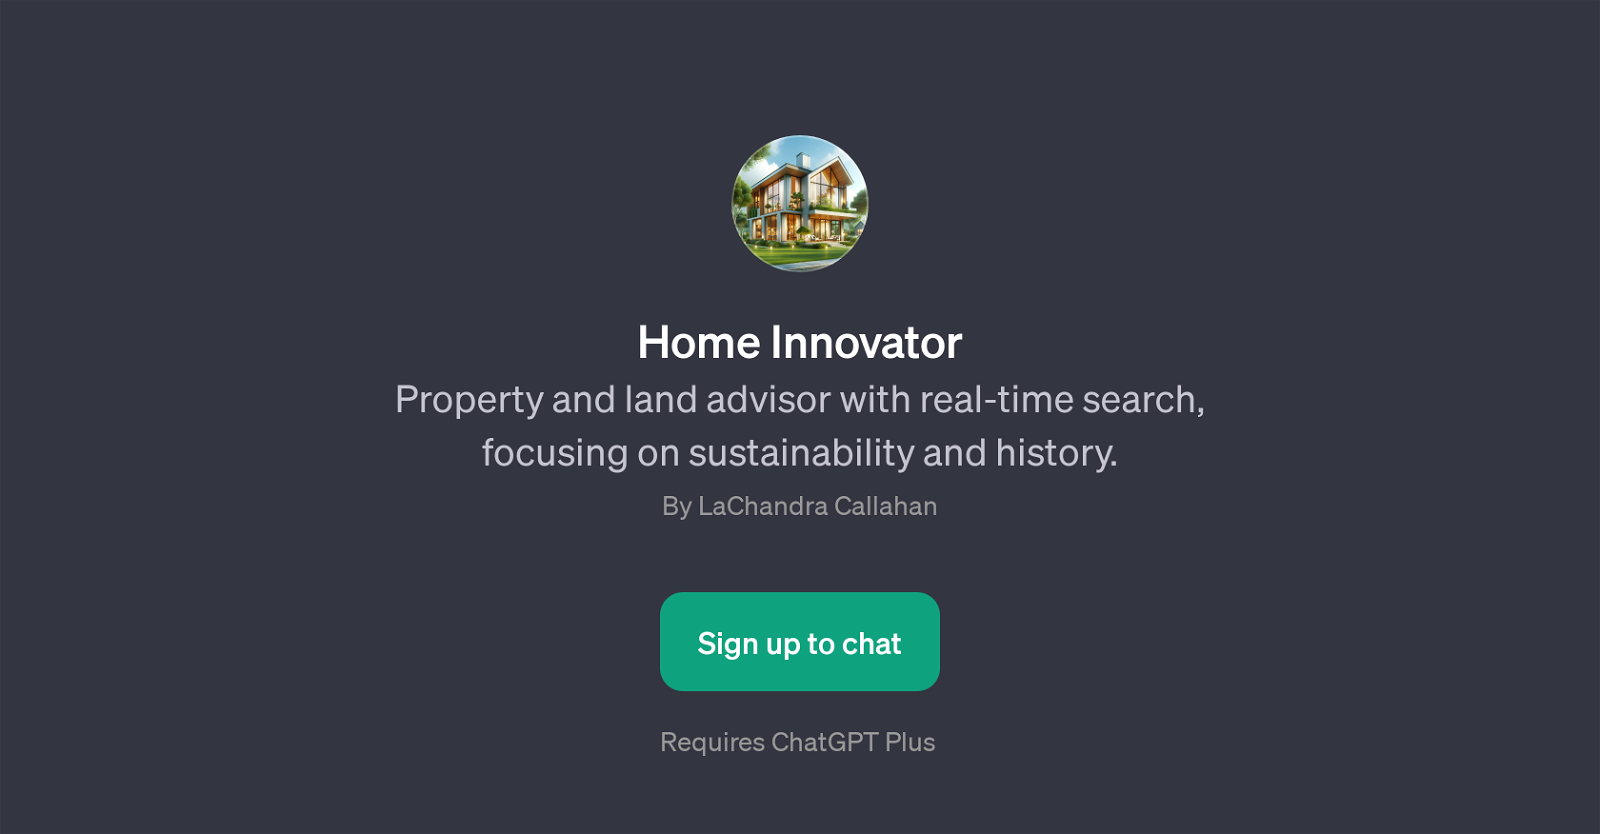 Home Innovator website